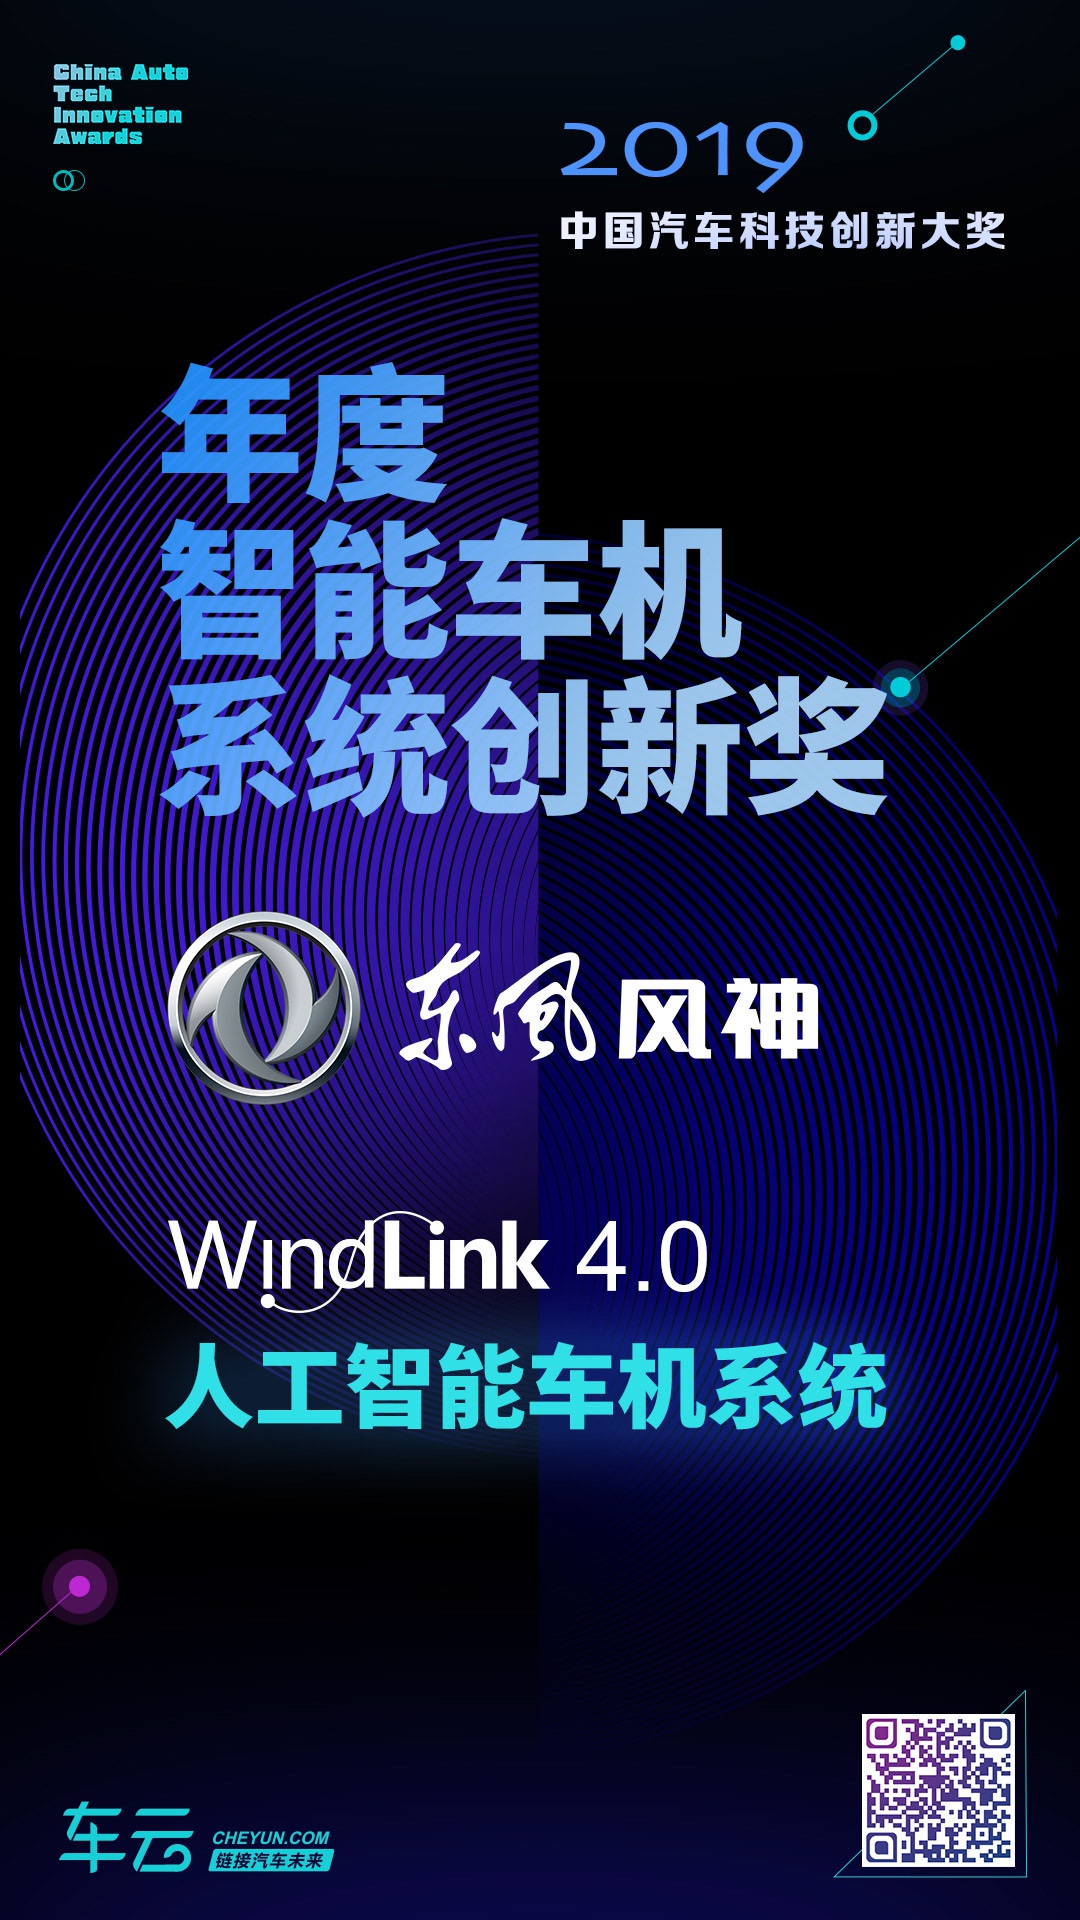 WindLink4.0智慧座舱因何荣获2019年度智能车机系统创新大奖？